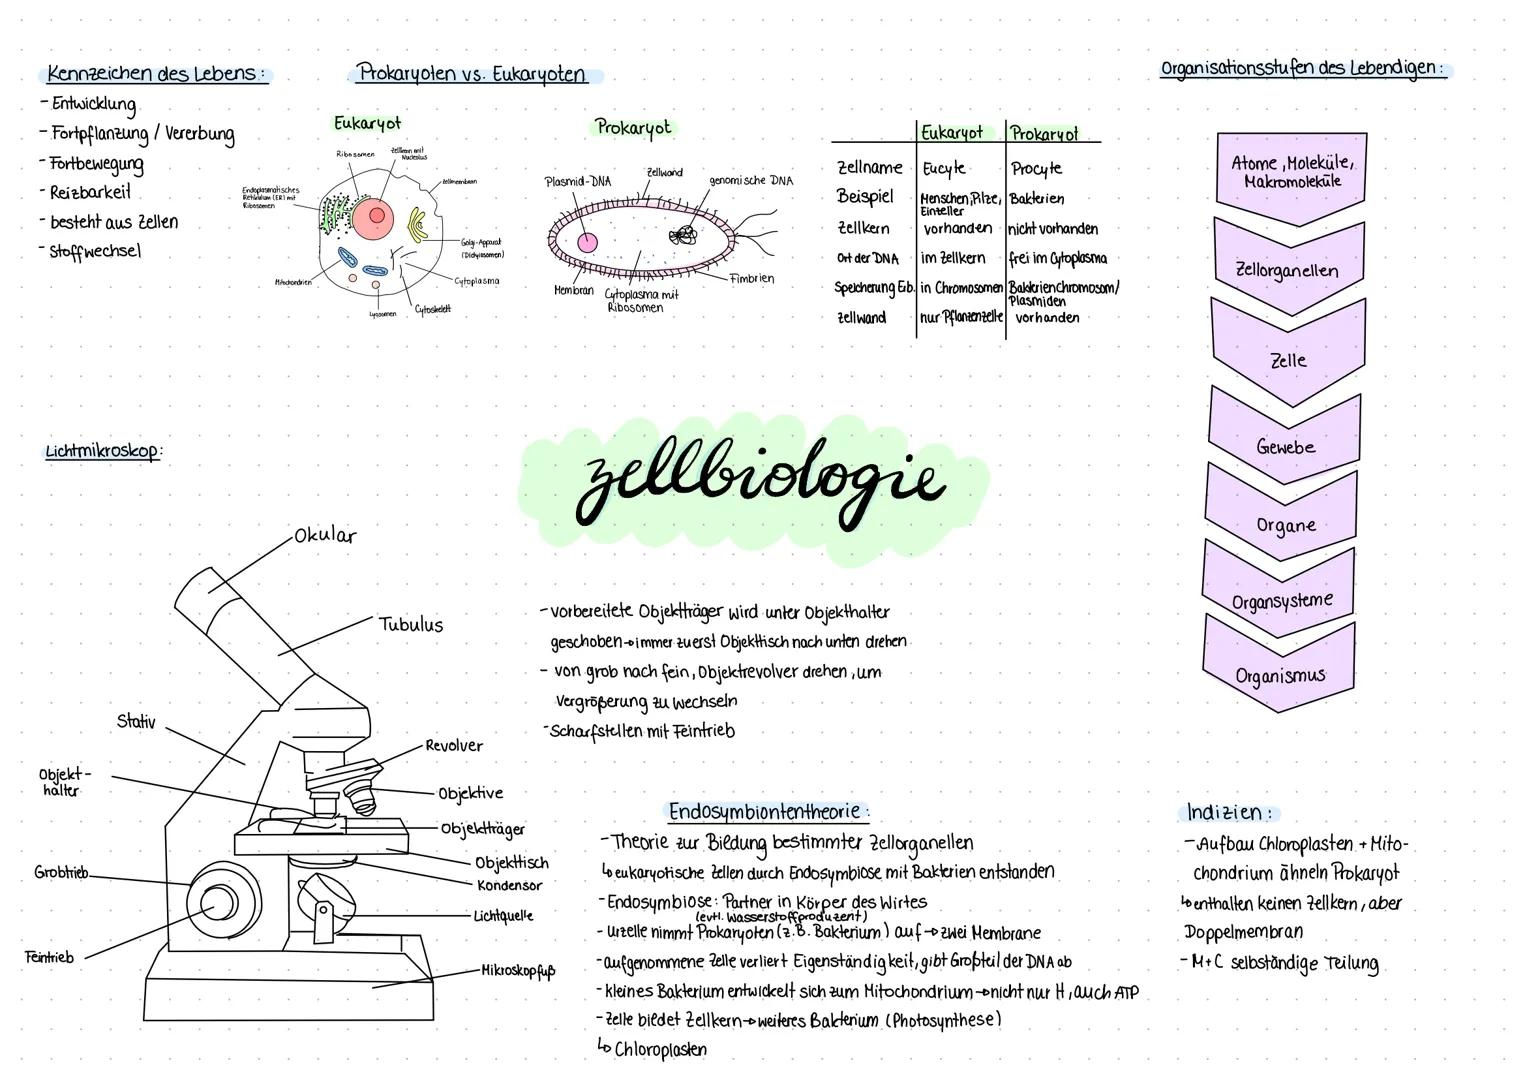 Tierische Zelle
Endoplasmatisches
Retikulum (ER) mit
Ribosomen
(Produktionshalle).
Hitochondrien
(Energiekraftwerk)
Ribosomen
(Recycling
Zel